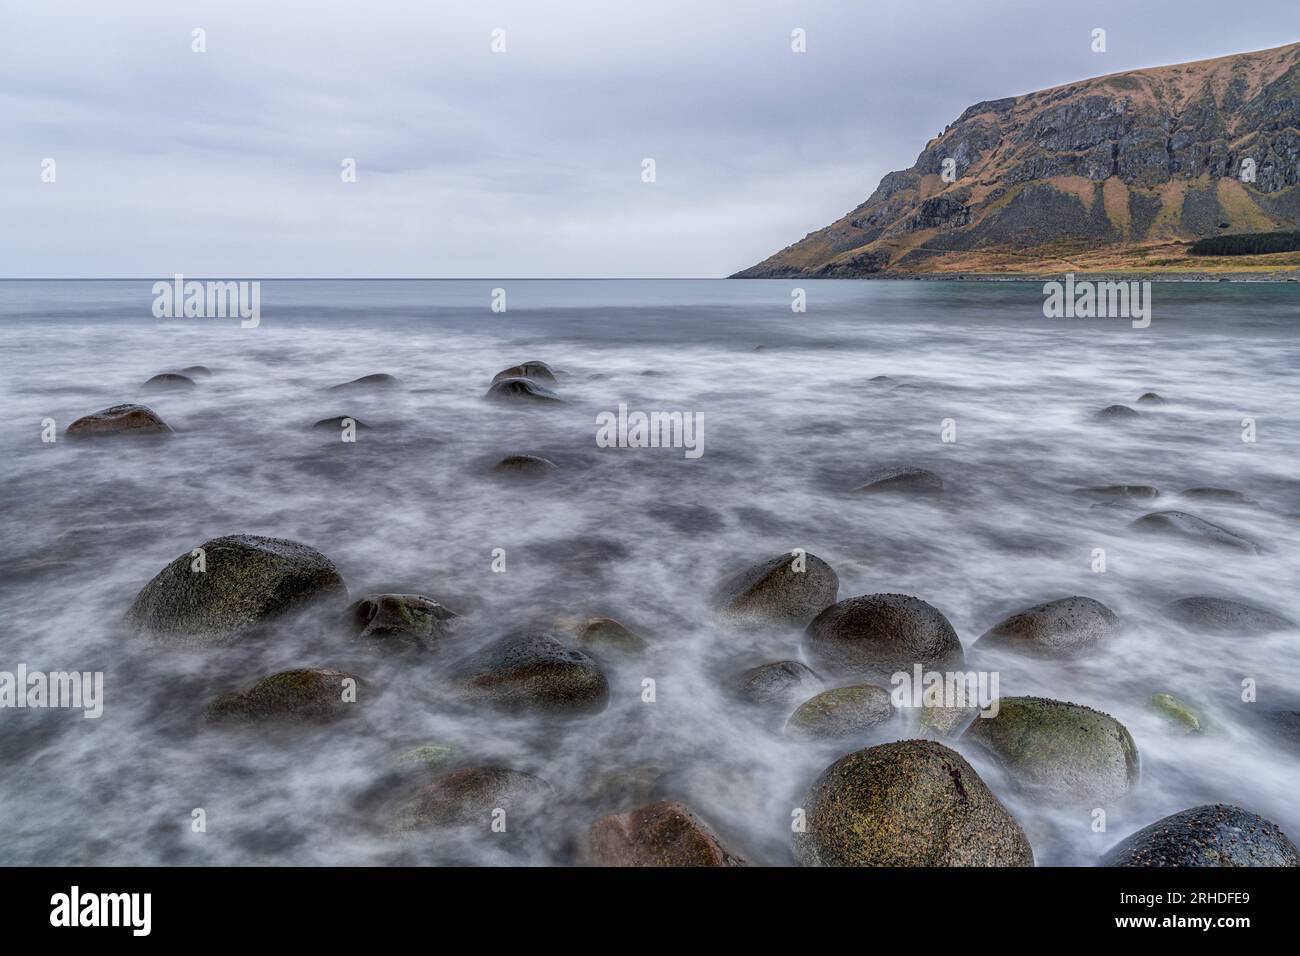 Waves crashing on rocks in the wild landscape of Unstad beach, Vestvagoy, Lofoten Islands, Norway Stock Photo